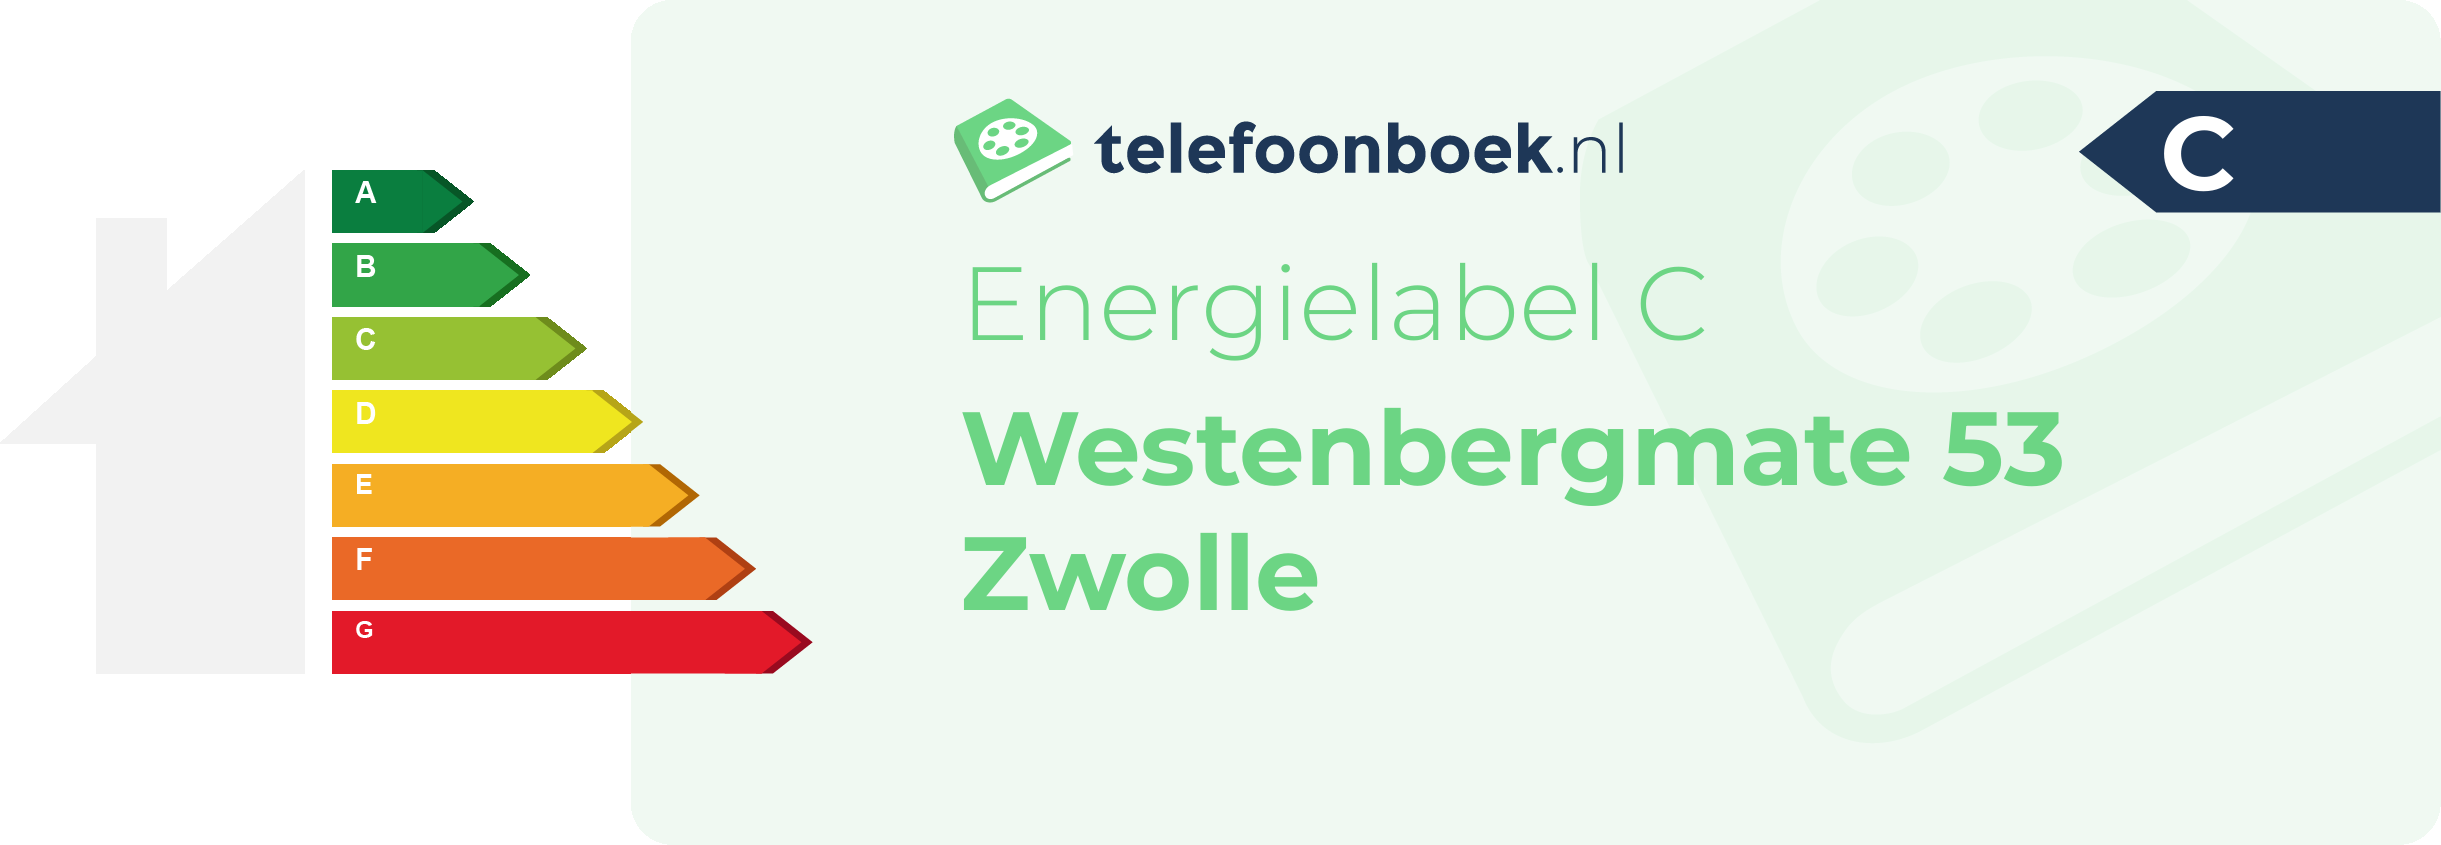 Energielabel Westenbergmate 53 Zwolle